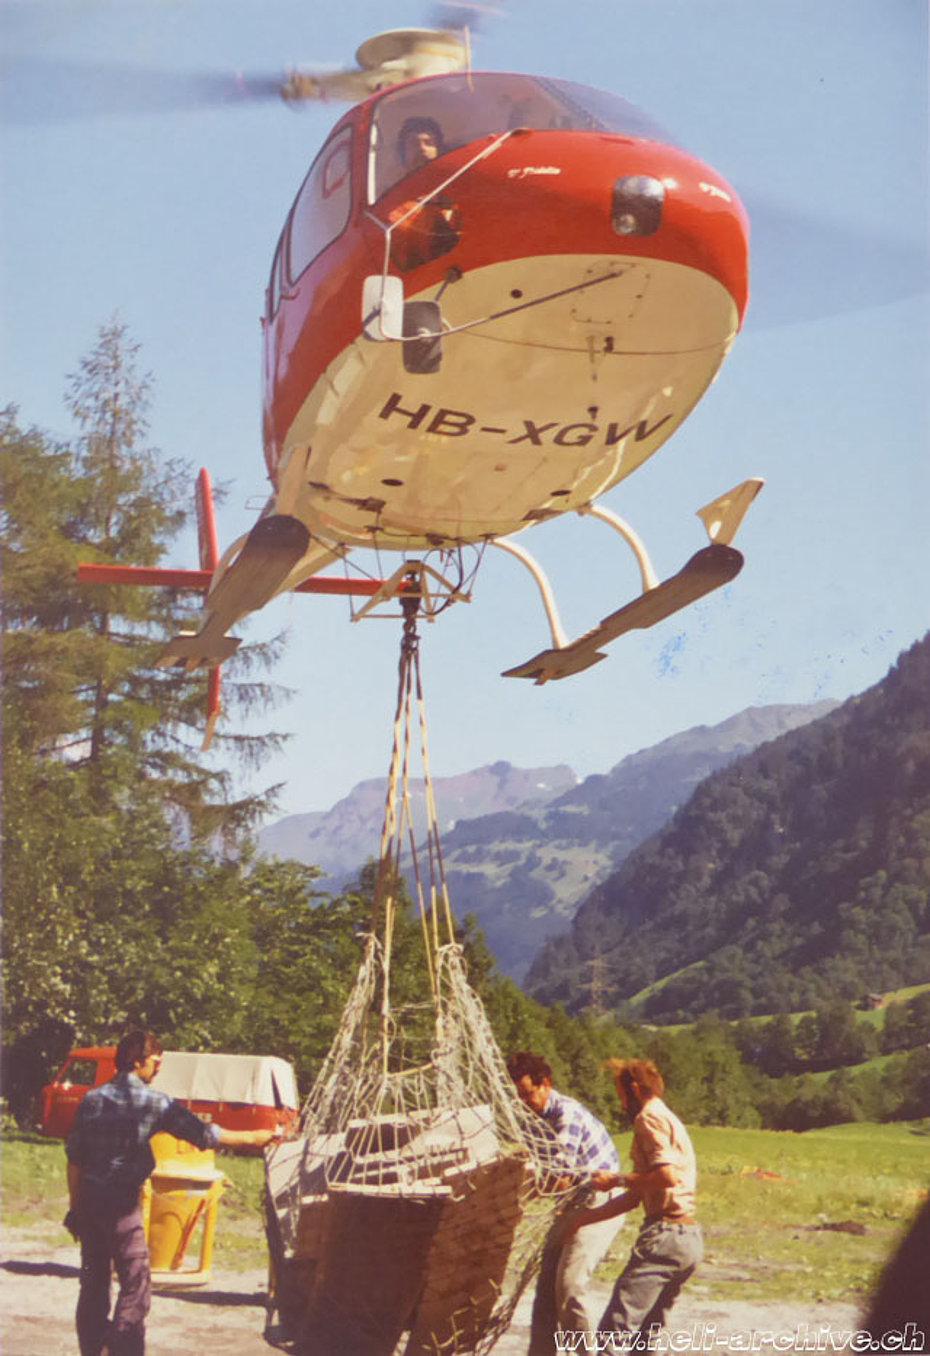 Alpi glaronesi, primi anni Ottanta - Peter Kolesnik ai comandi dell'AS 350B Ecureuil HB-XGW della Linth Helikopter (famiglia Kolesnik)